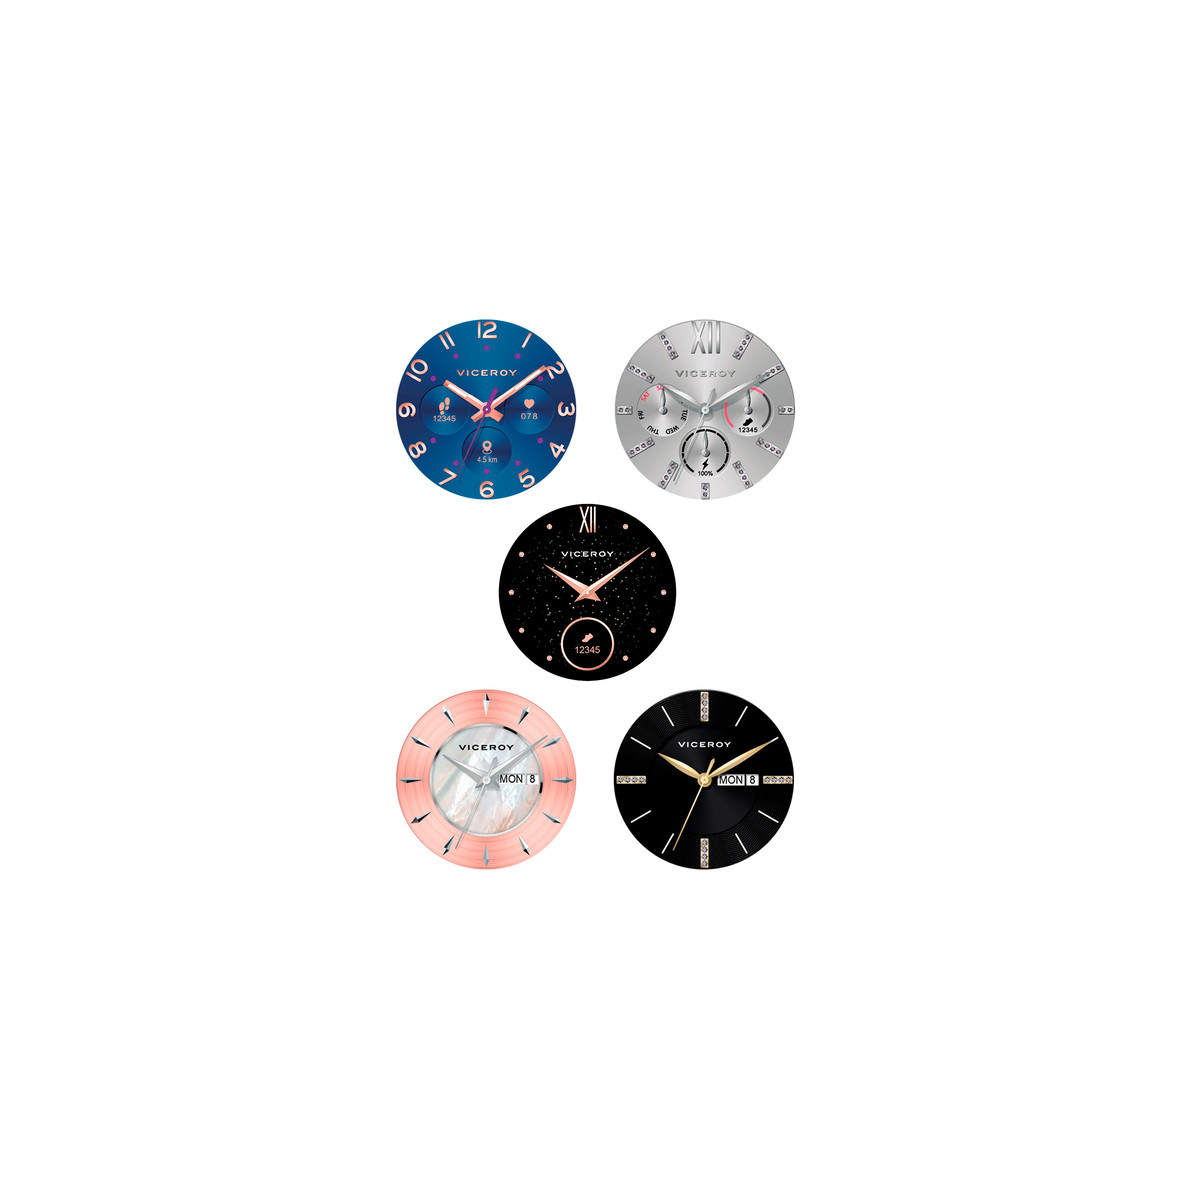 Reloj Viceroy SmartPro IP Rosa Mujer 41102-70